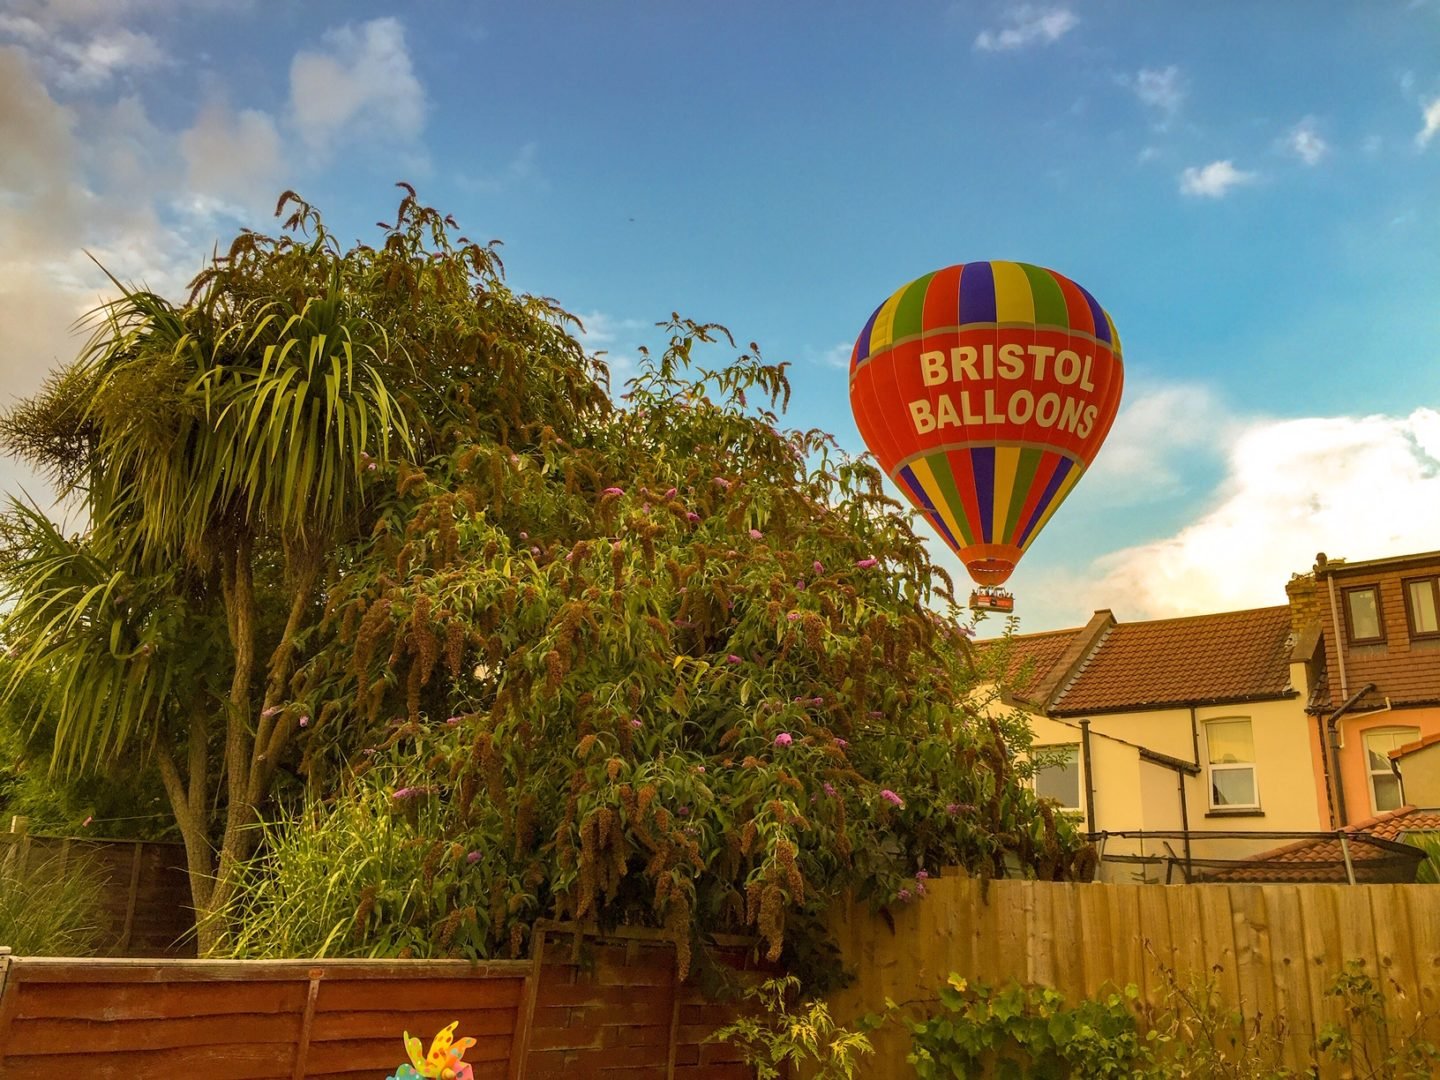 bristol balloons over Horfield rooftops